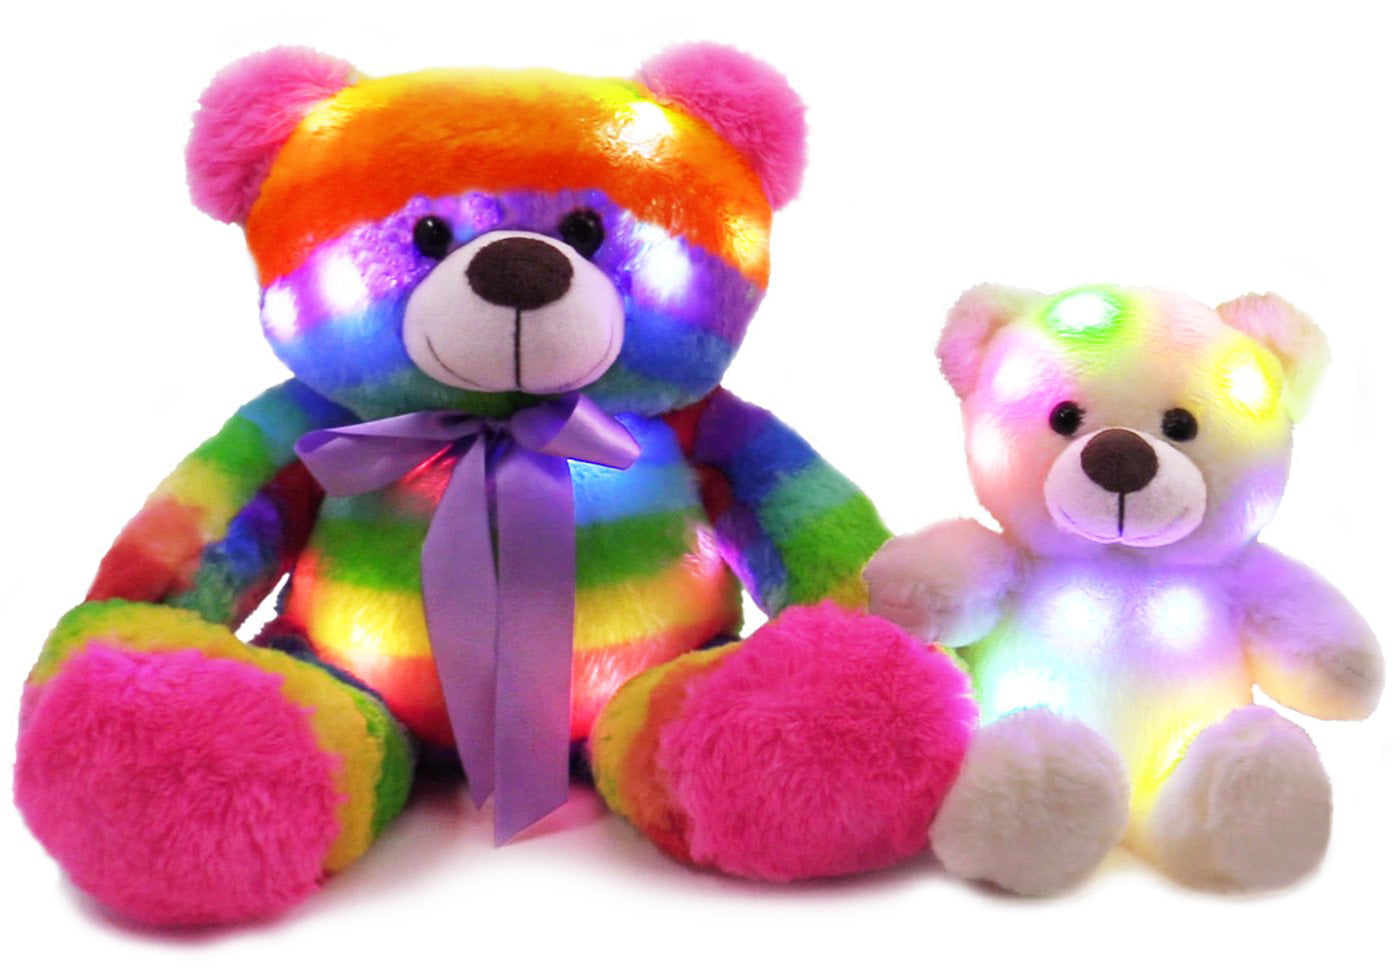 Cute Plush Soft Toy For Girls Baby LED Light Up Stuffed Bear Kids Doll Xmas Gift 